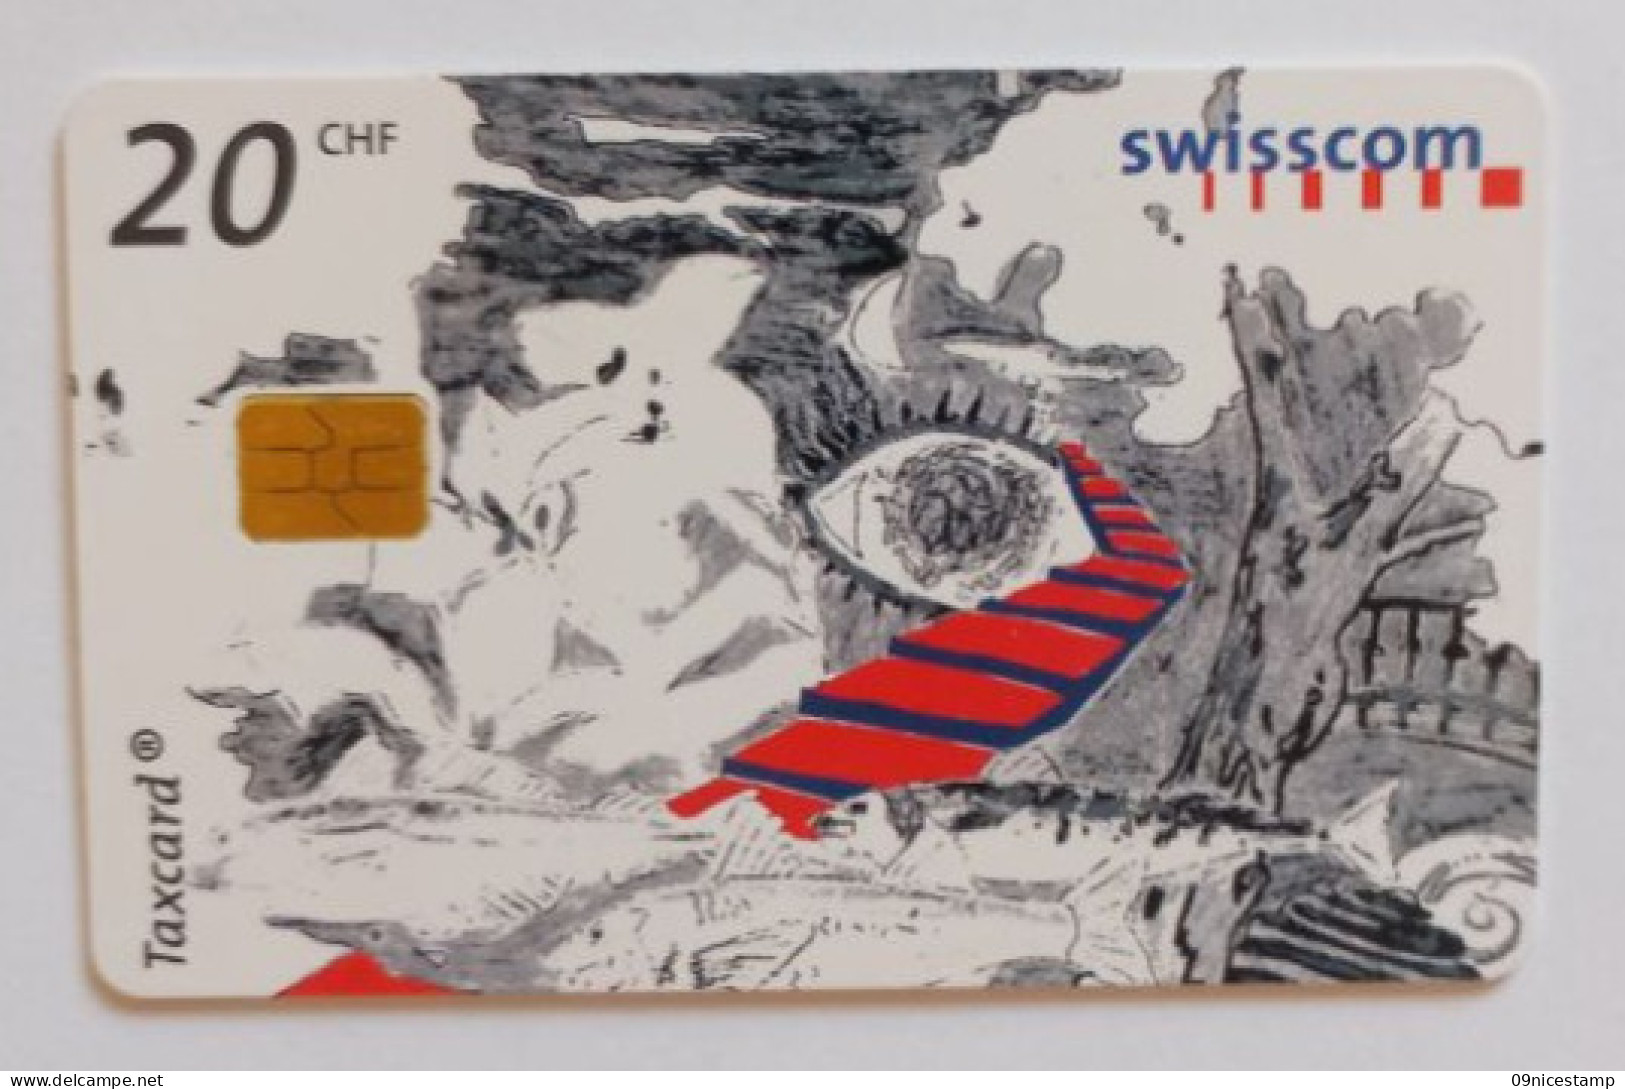 Suisse, Telephonecard, Empty And Used - Switzerland